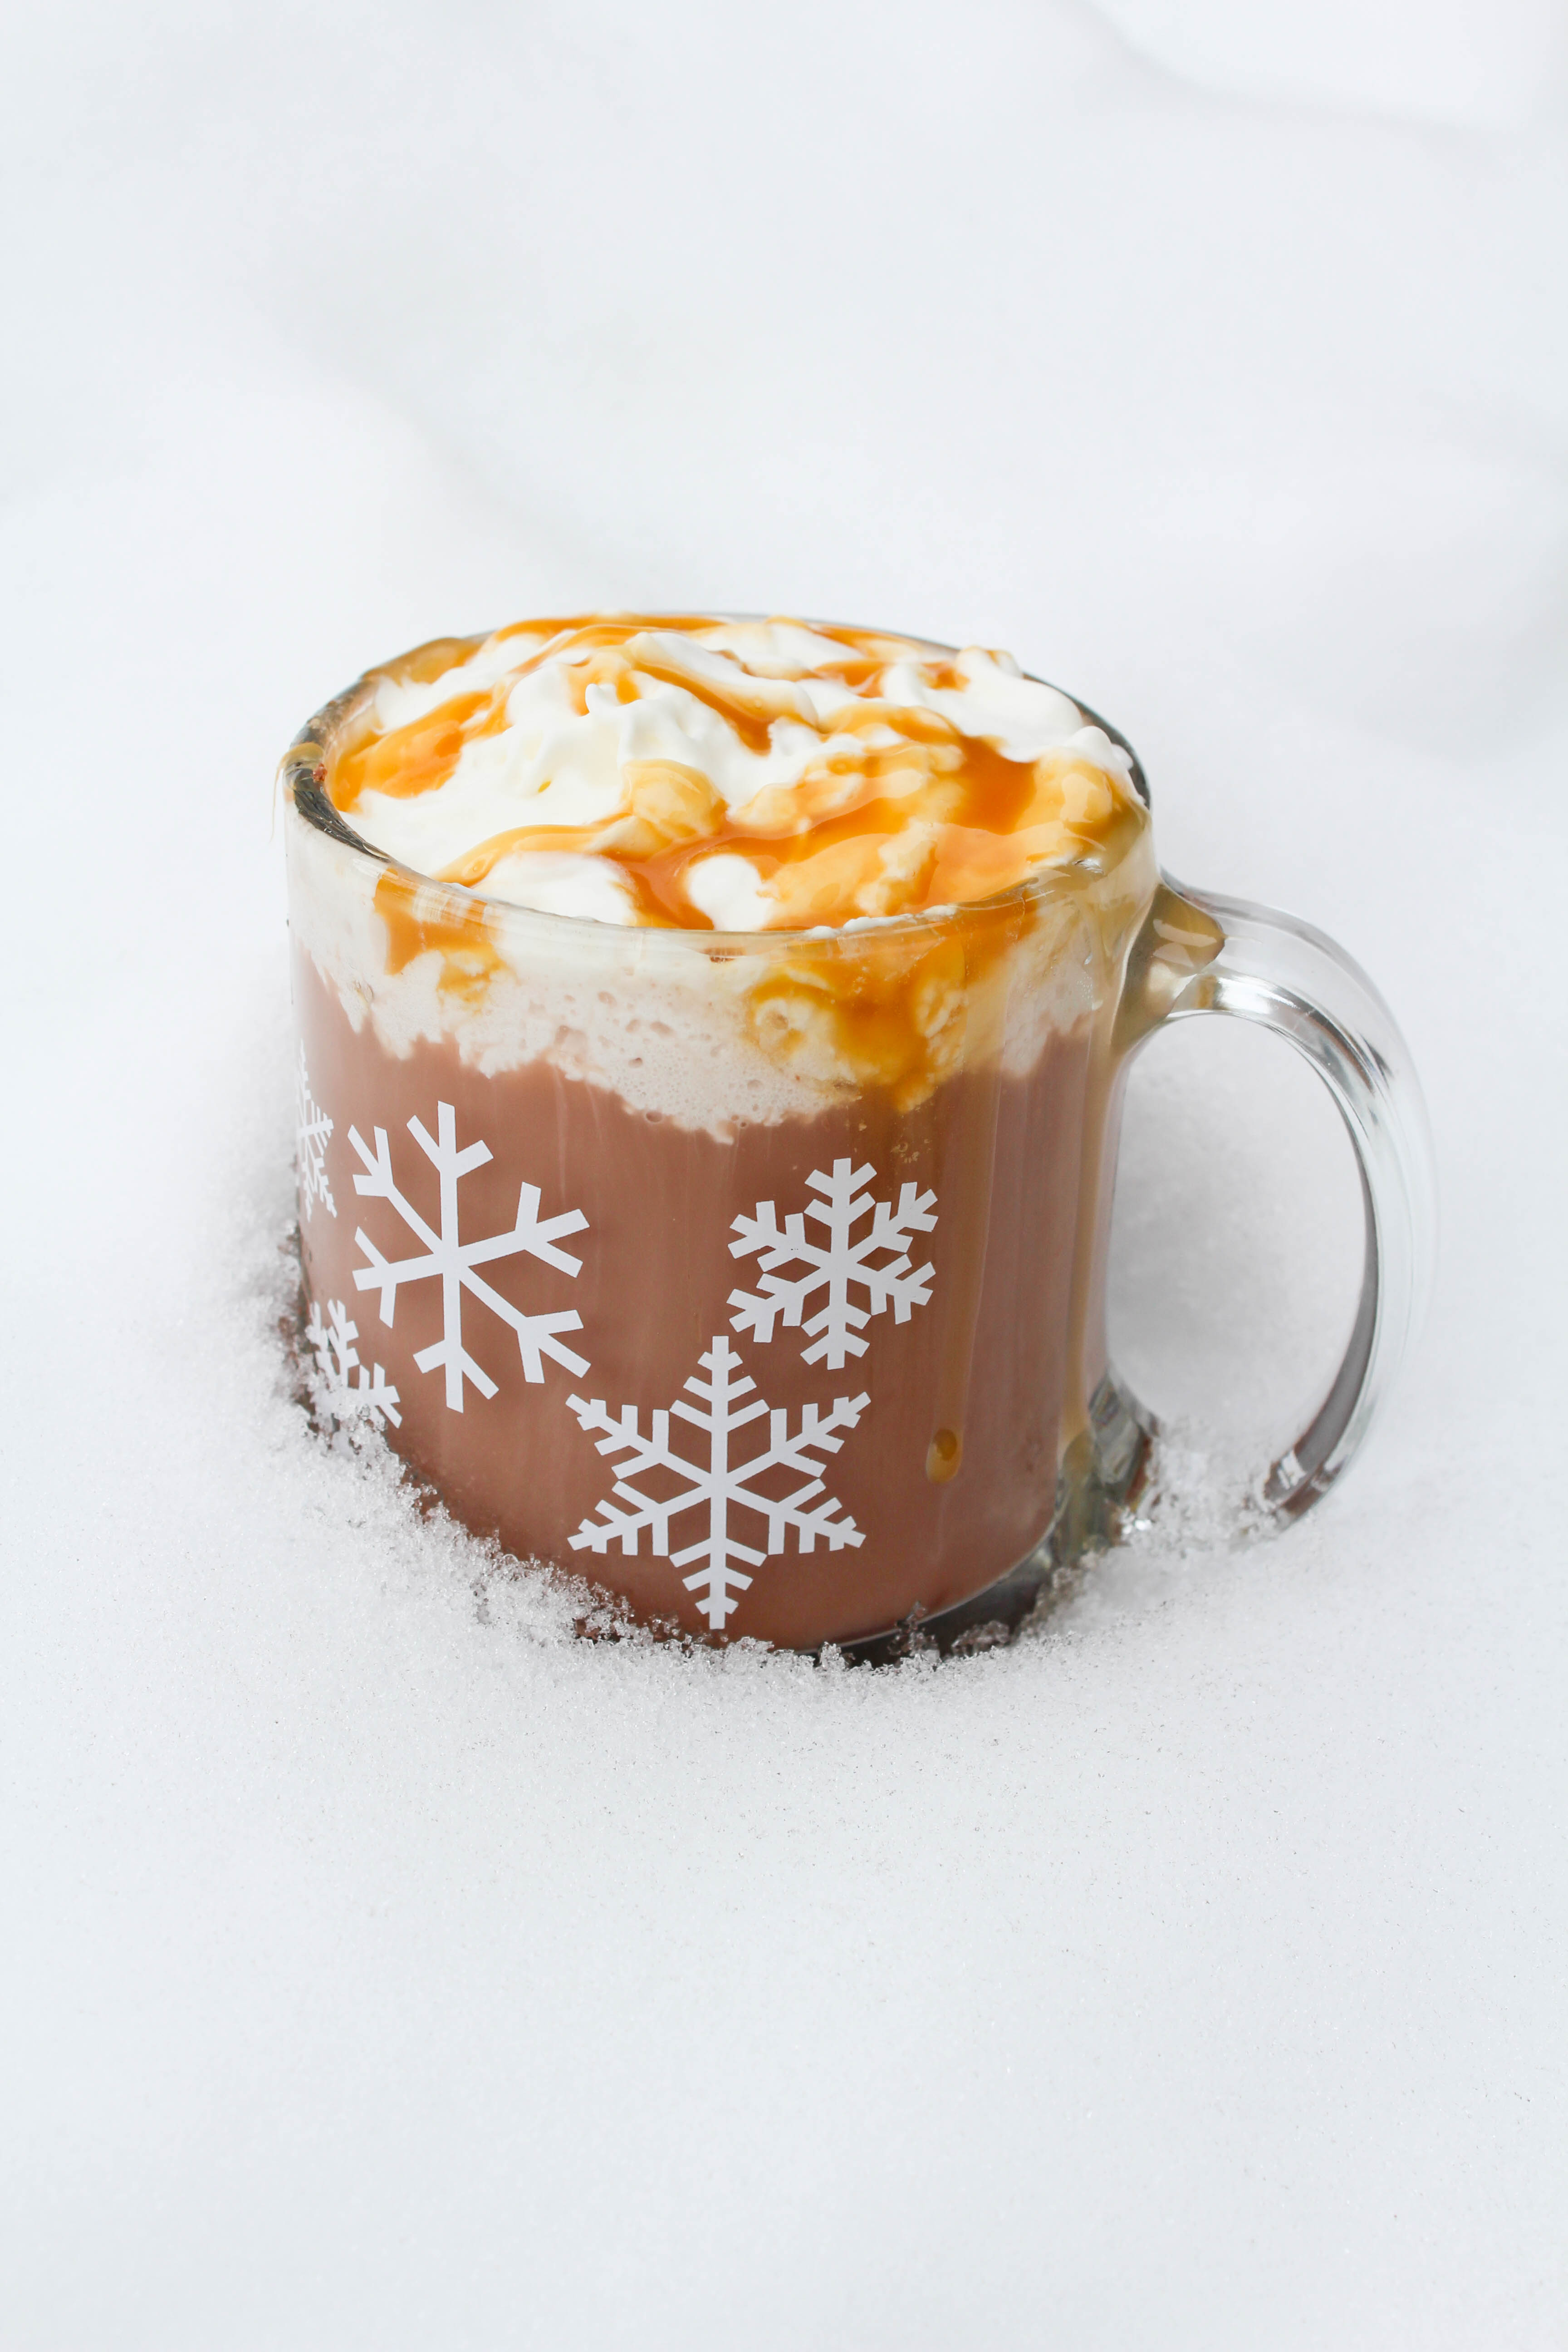 Frozen Caramel Hot Chocolate - Let's Mingle Blog